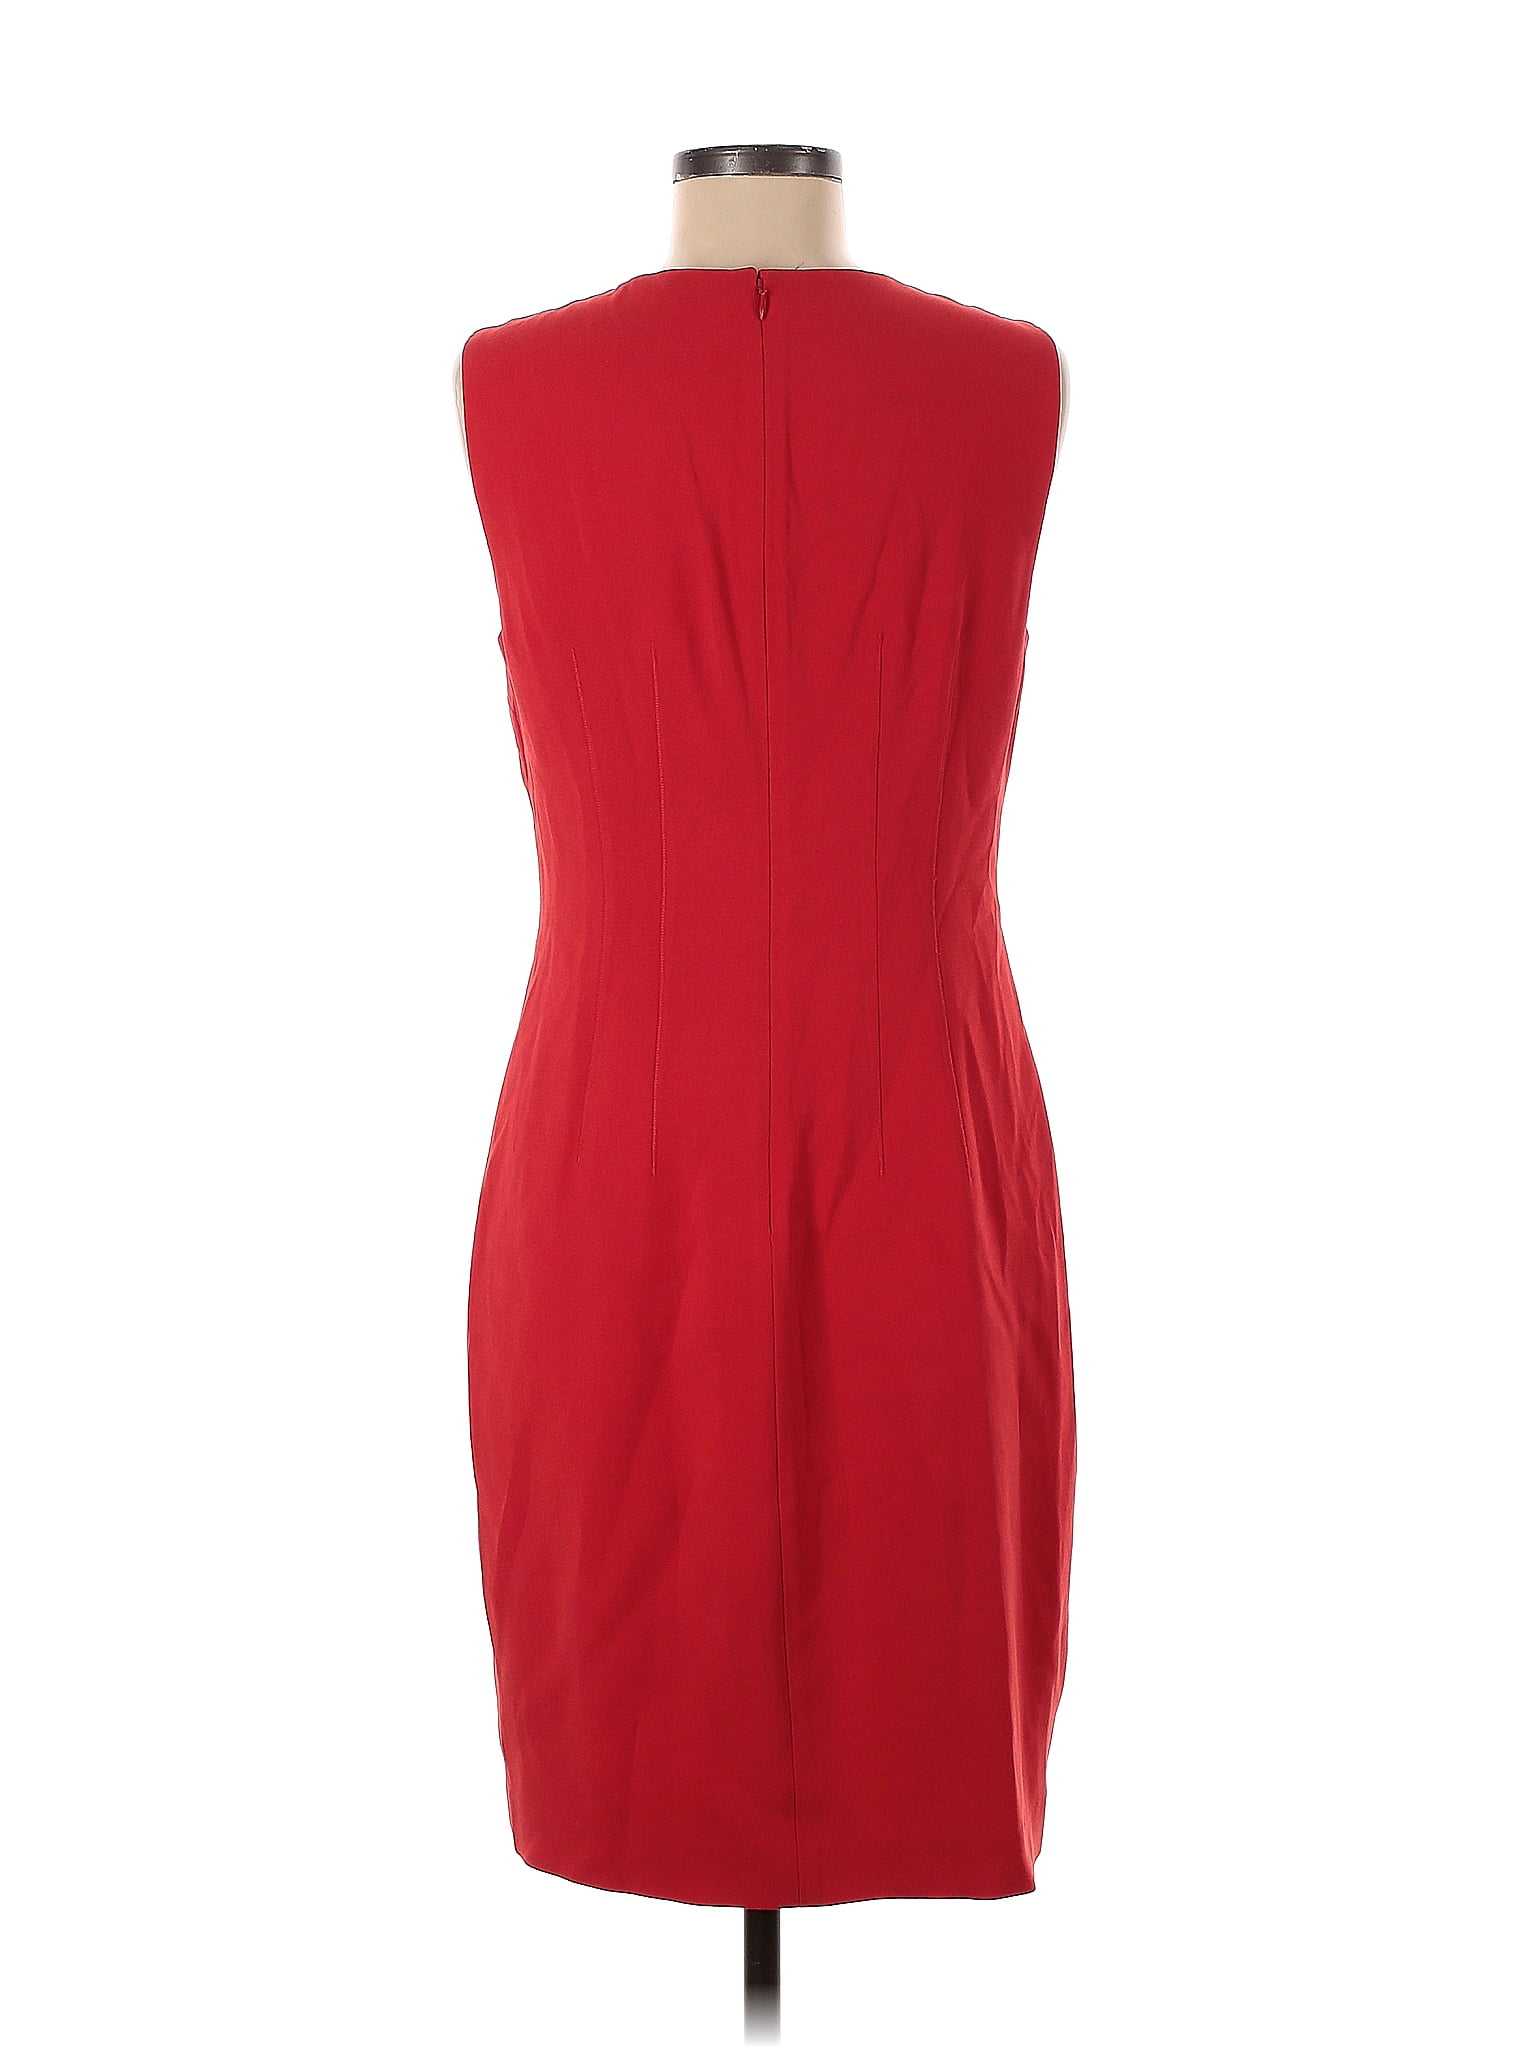 Elie Tahari - Red Sleeveless Sheath Dress Sz 6 – Current Boutique